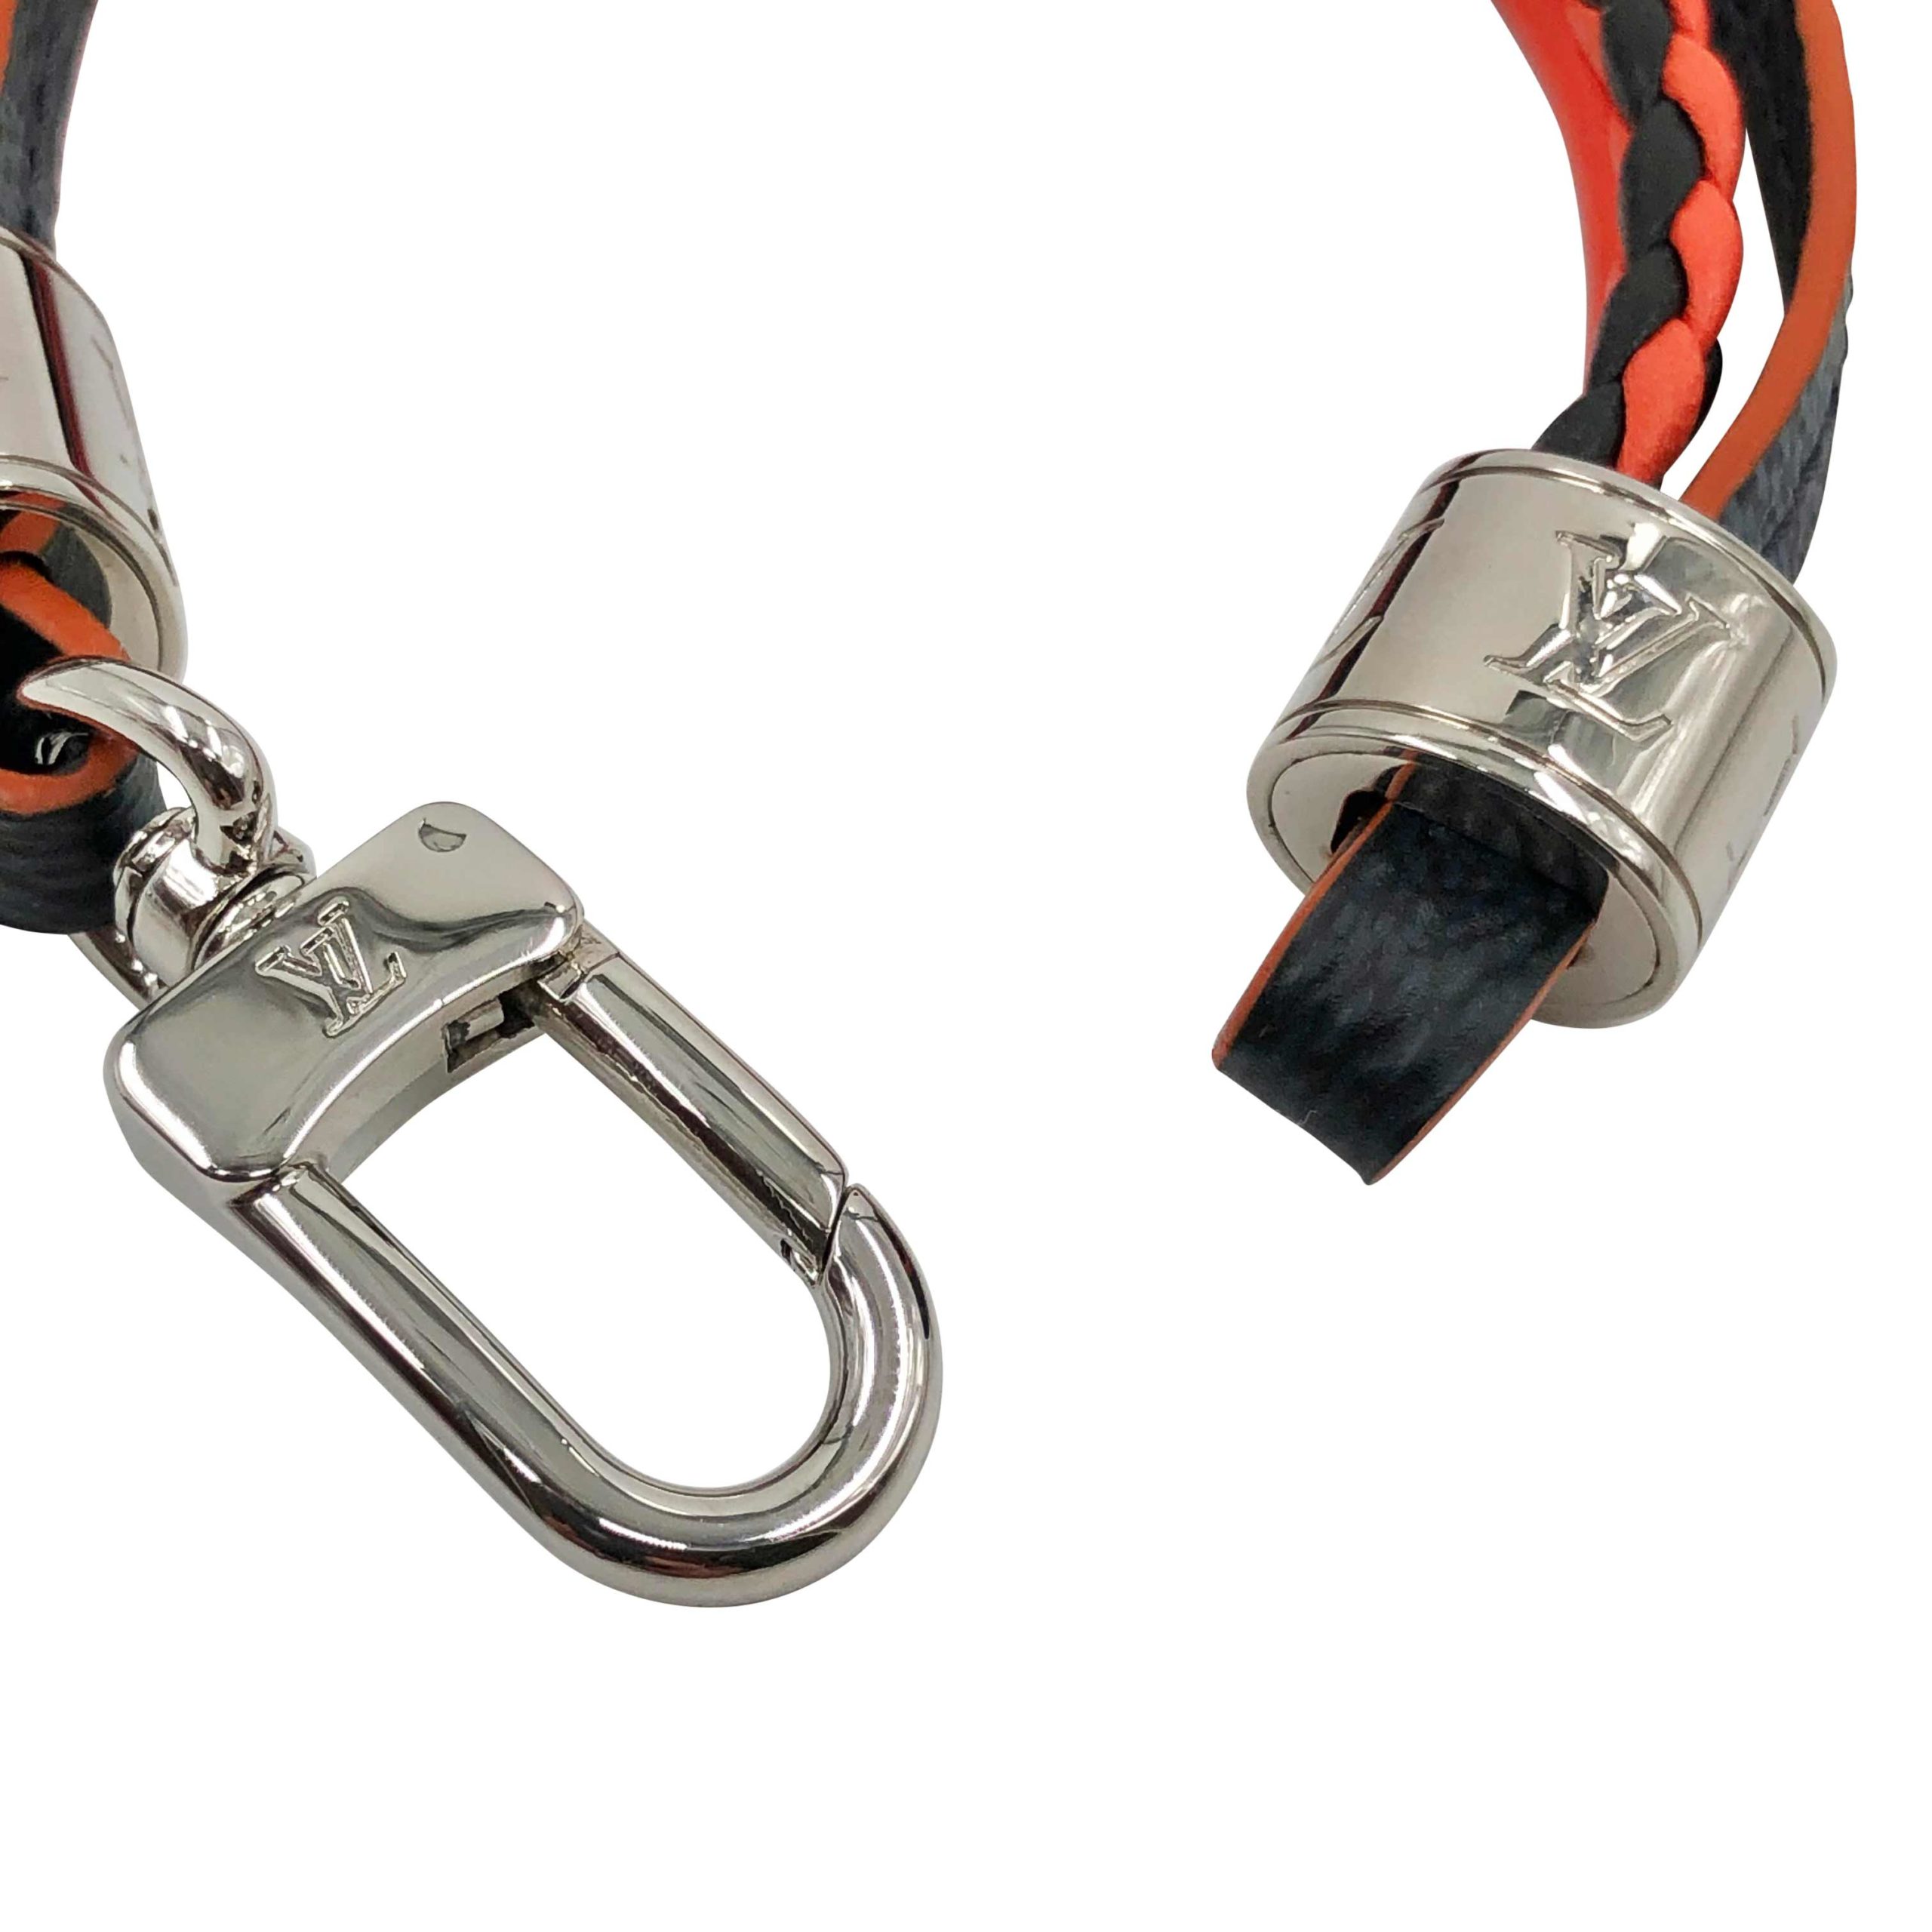 Products By Louis Vuitton: Braidlock Leather Bracelet